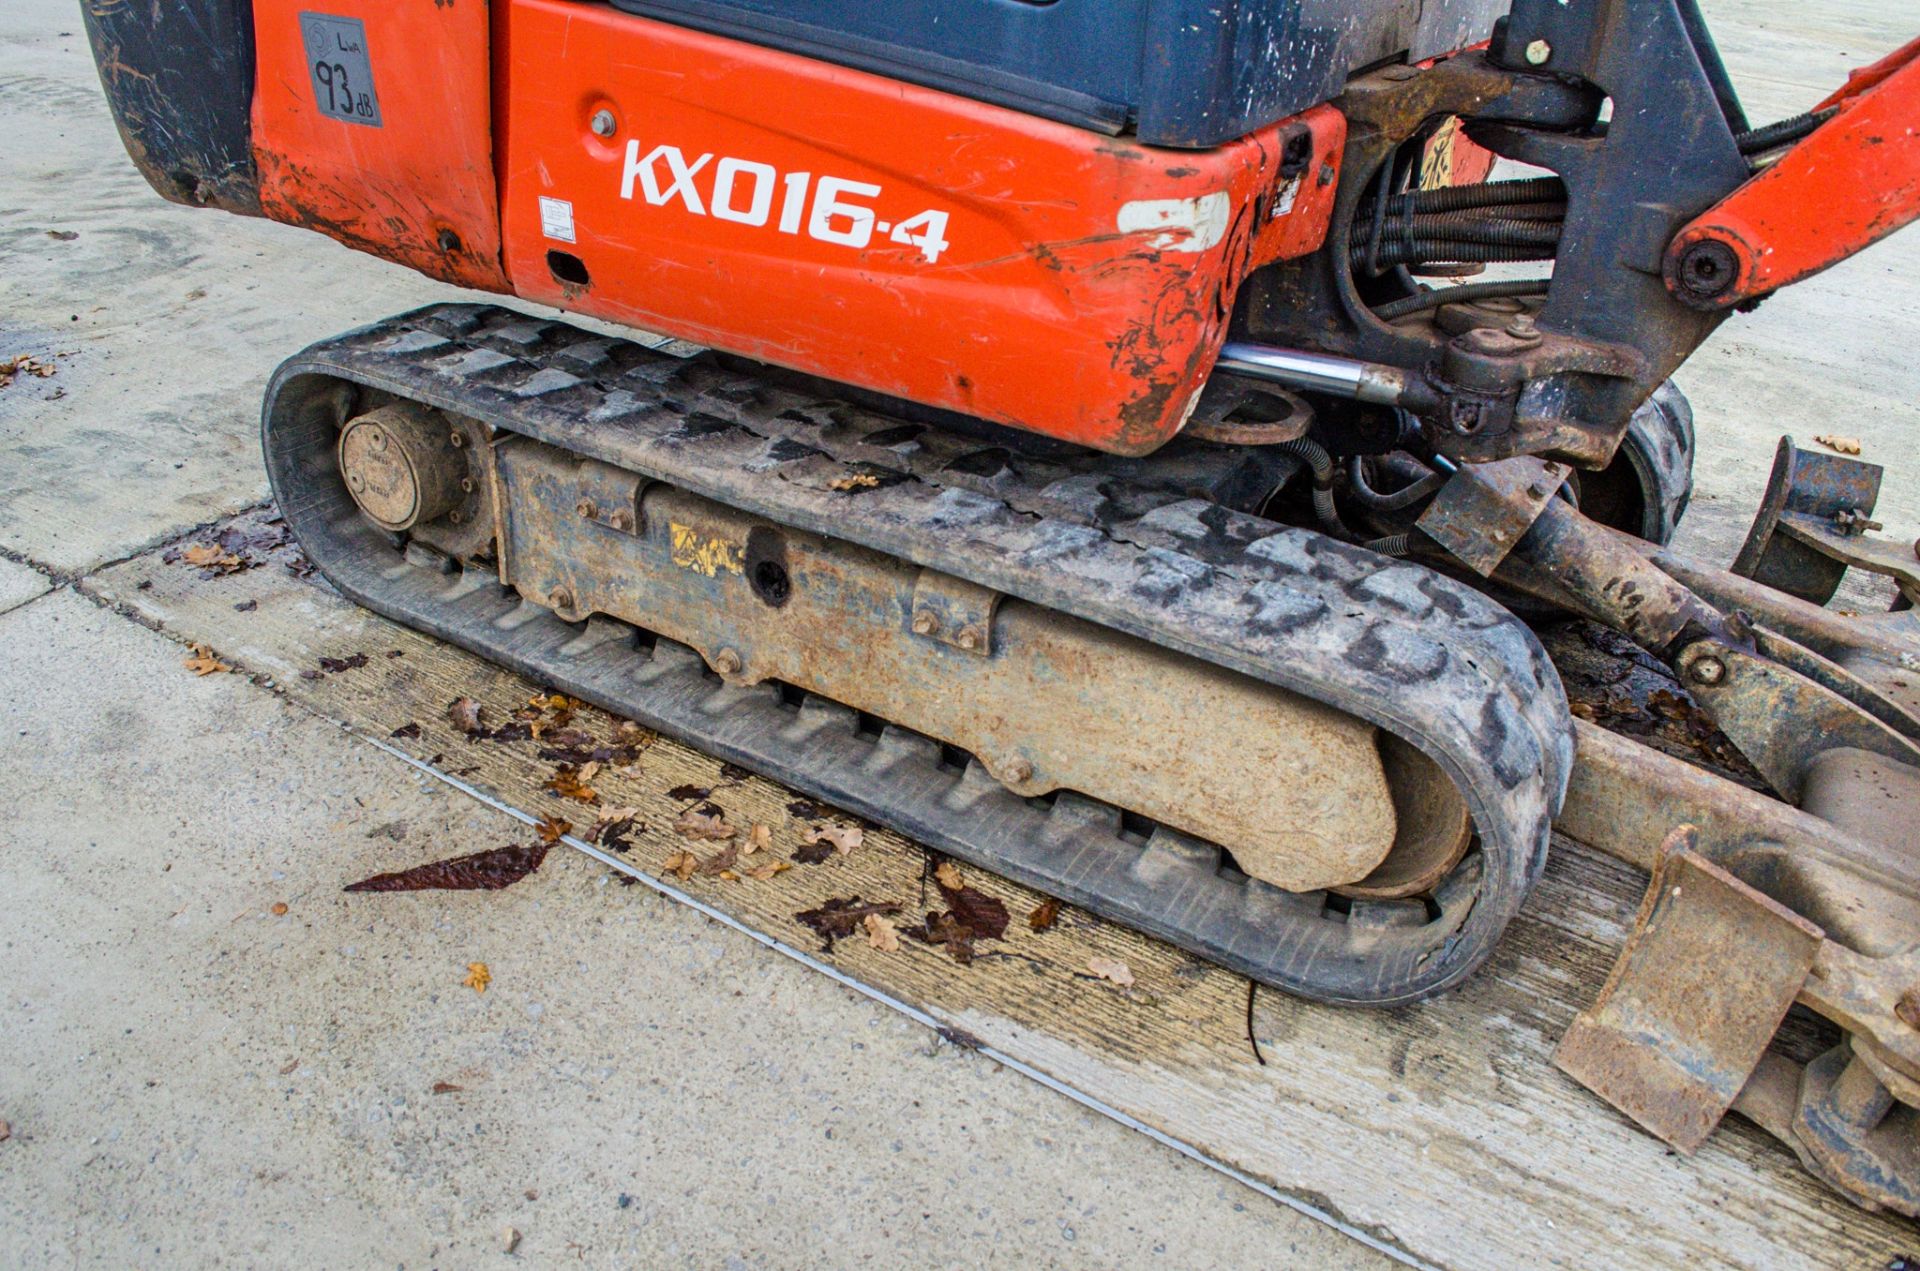 Kubota KX016-4 1.6 tonne rubber tracked mini excavator Year: 2014 S/N: 577998 Recorded Hours: 2026 - Image 10 of 18